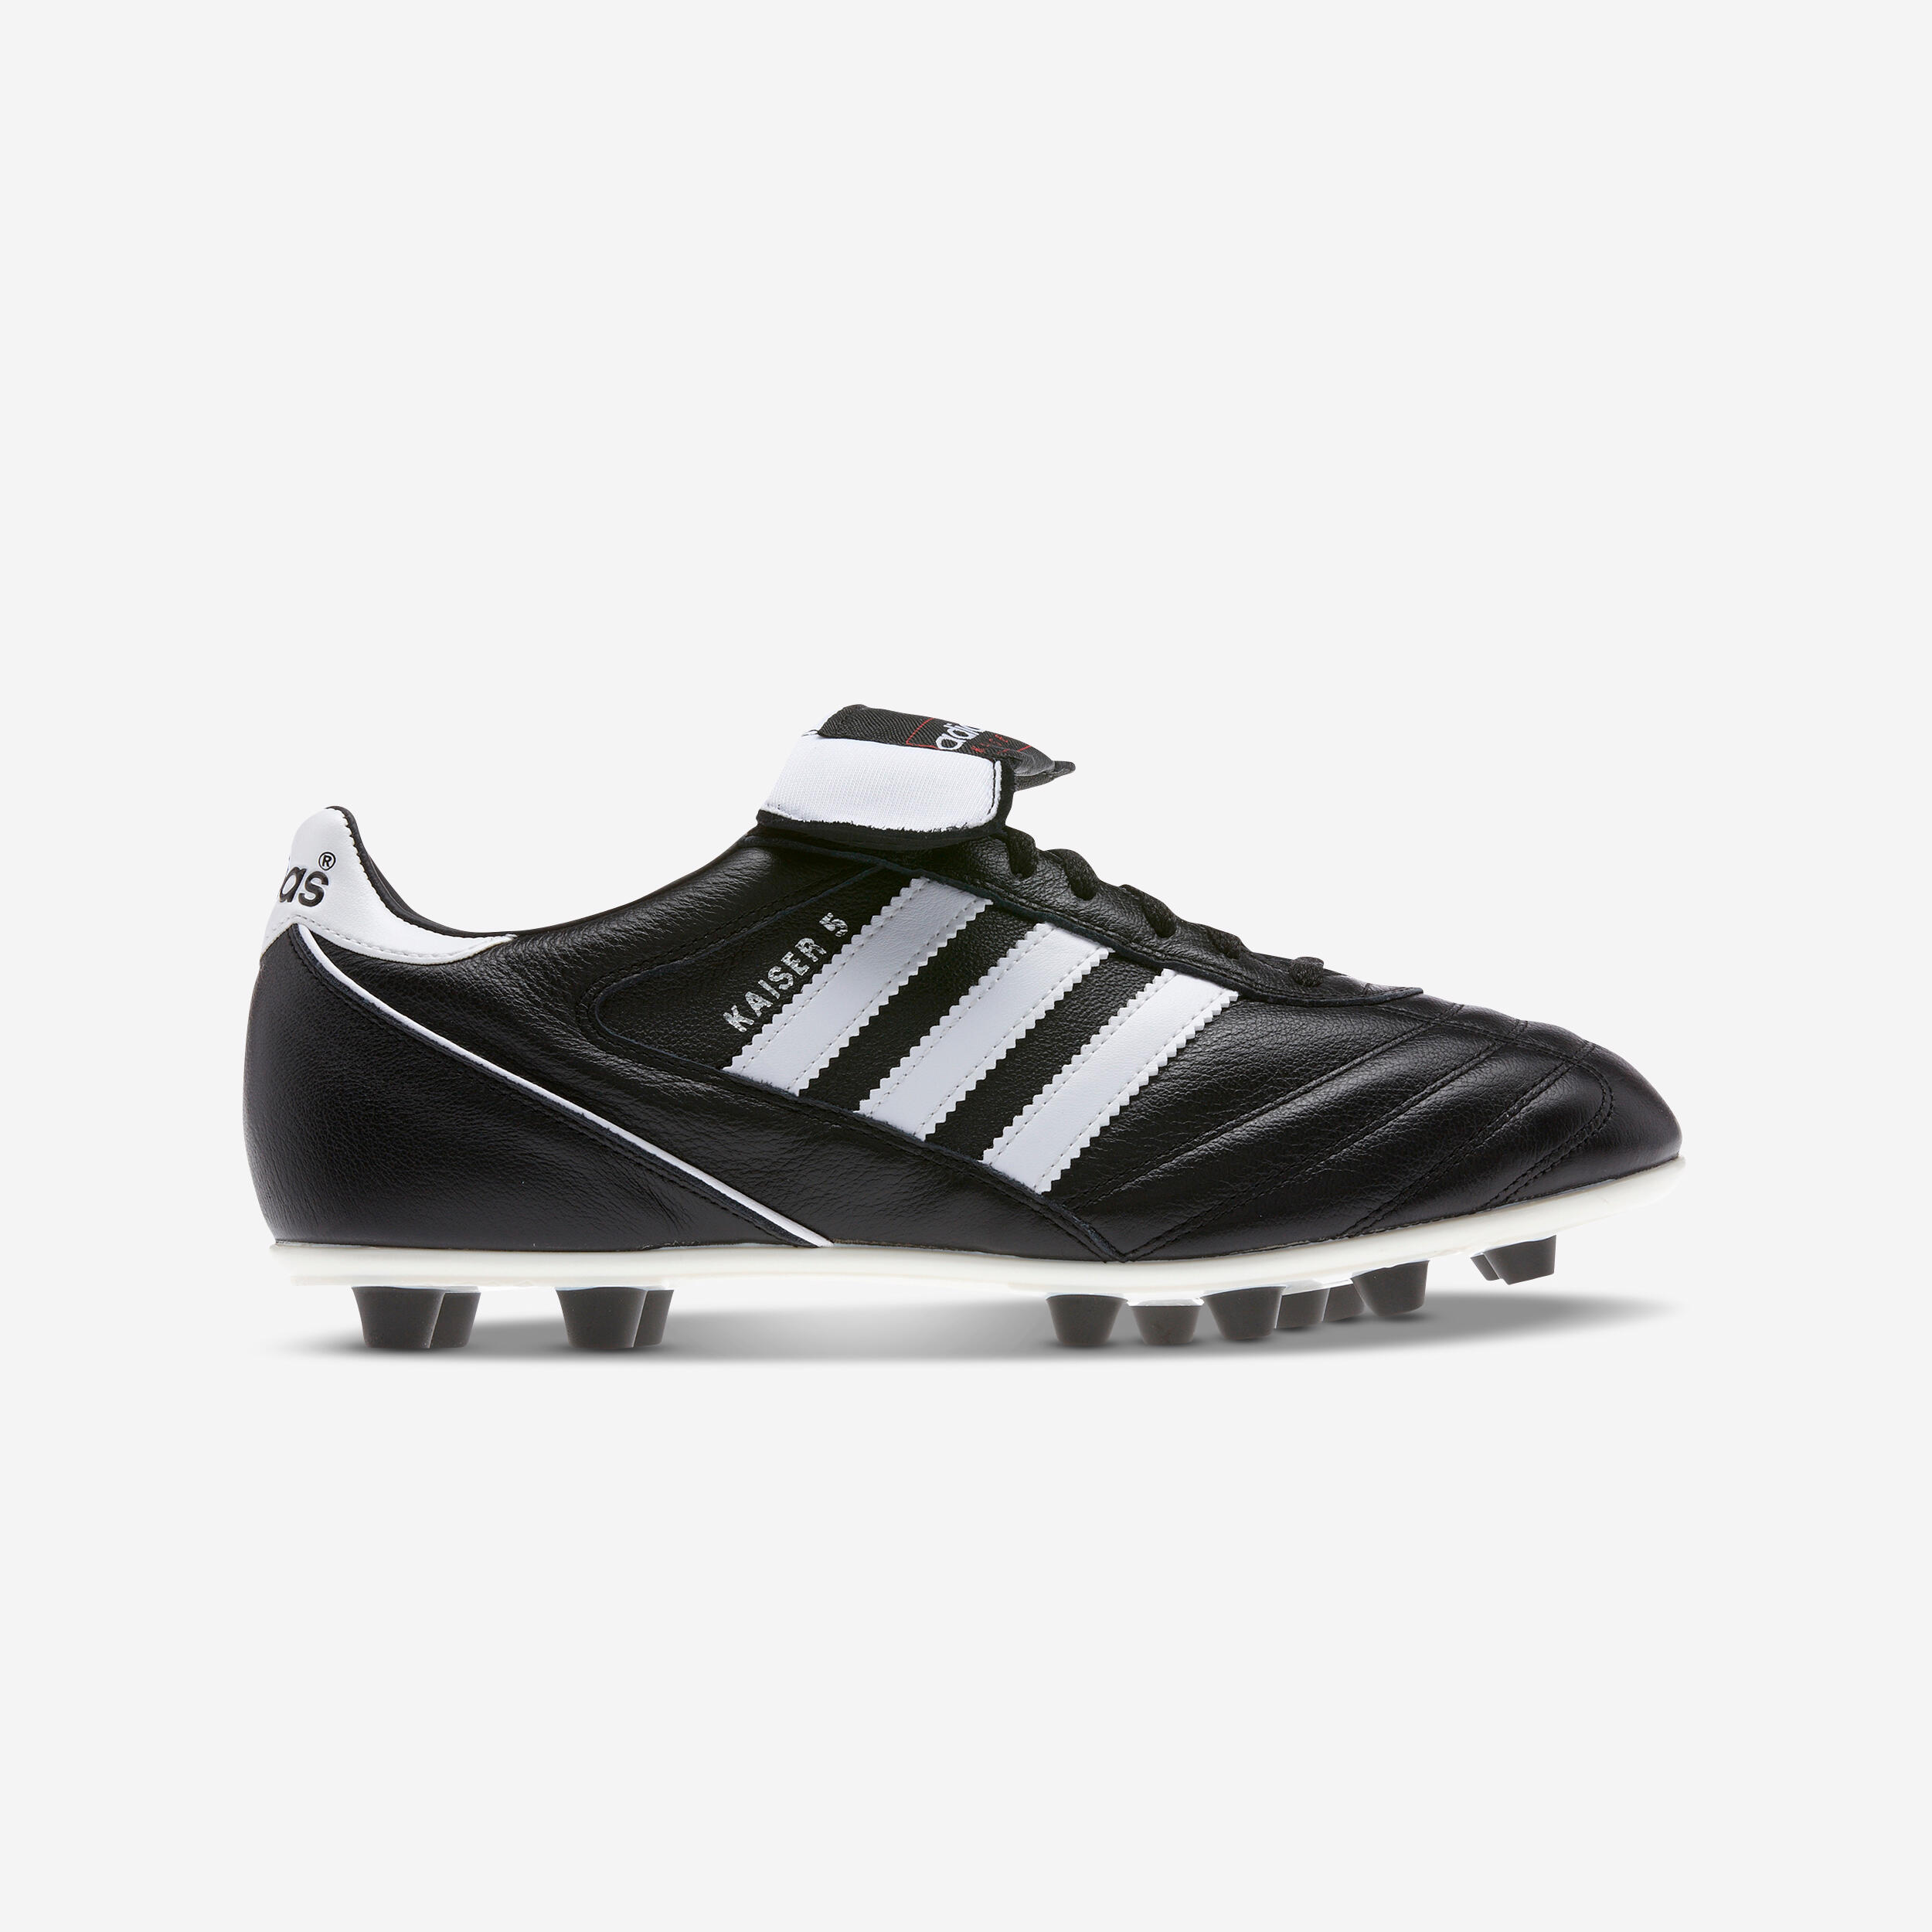 Adidas Adult Firm Ground Football Boots Kaiser Fg